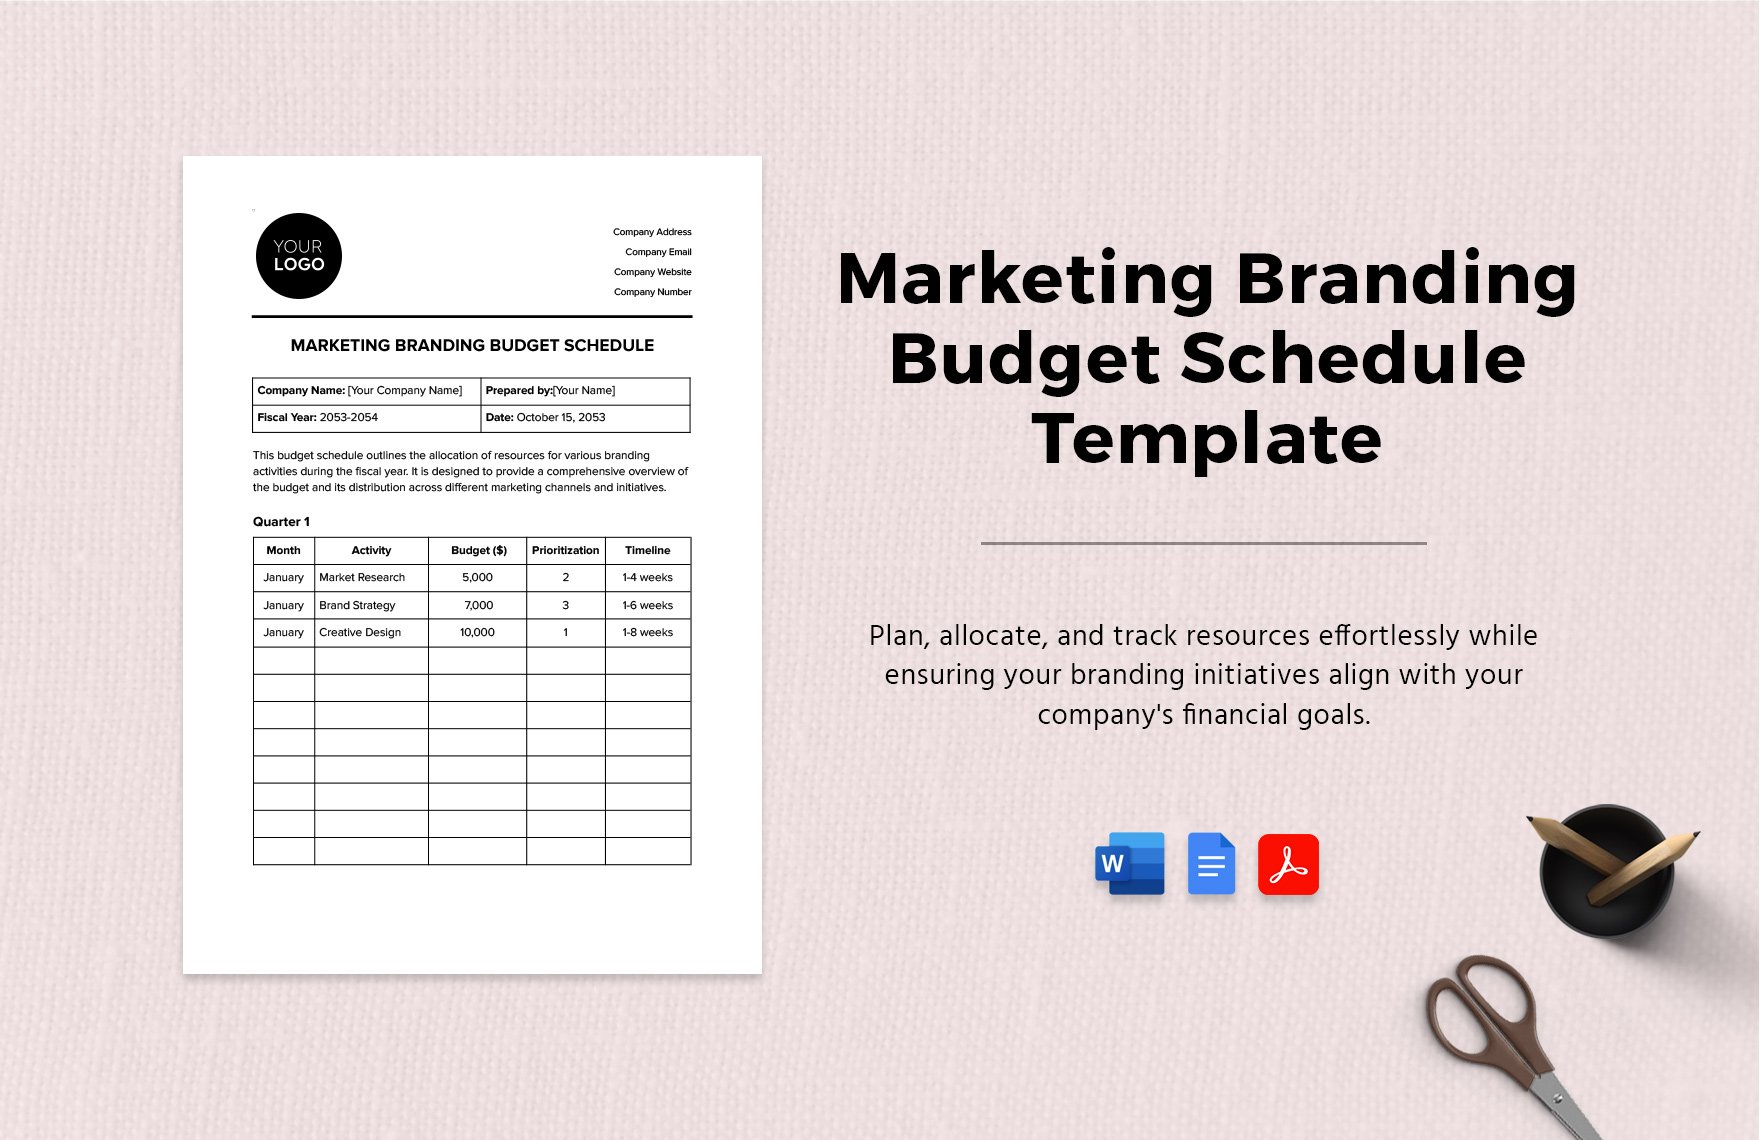 Marketing Branding Budget Schedule Template